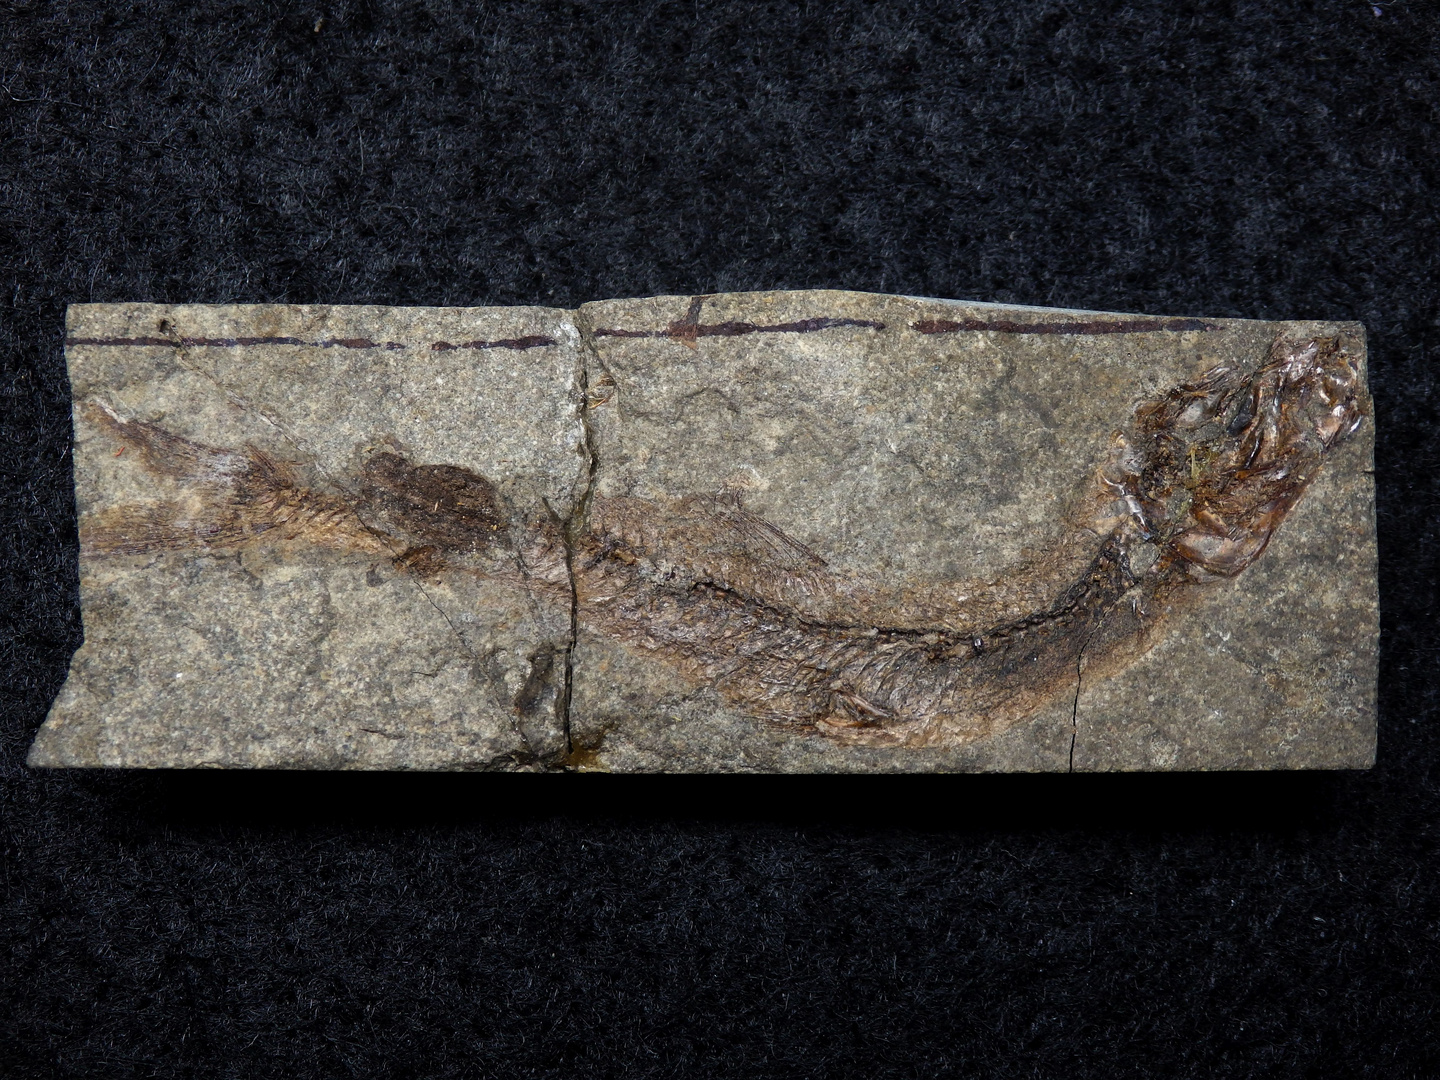 Fossiler Fisch der Moler-Formation - Lachsartiger Fisch